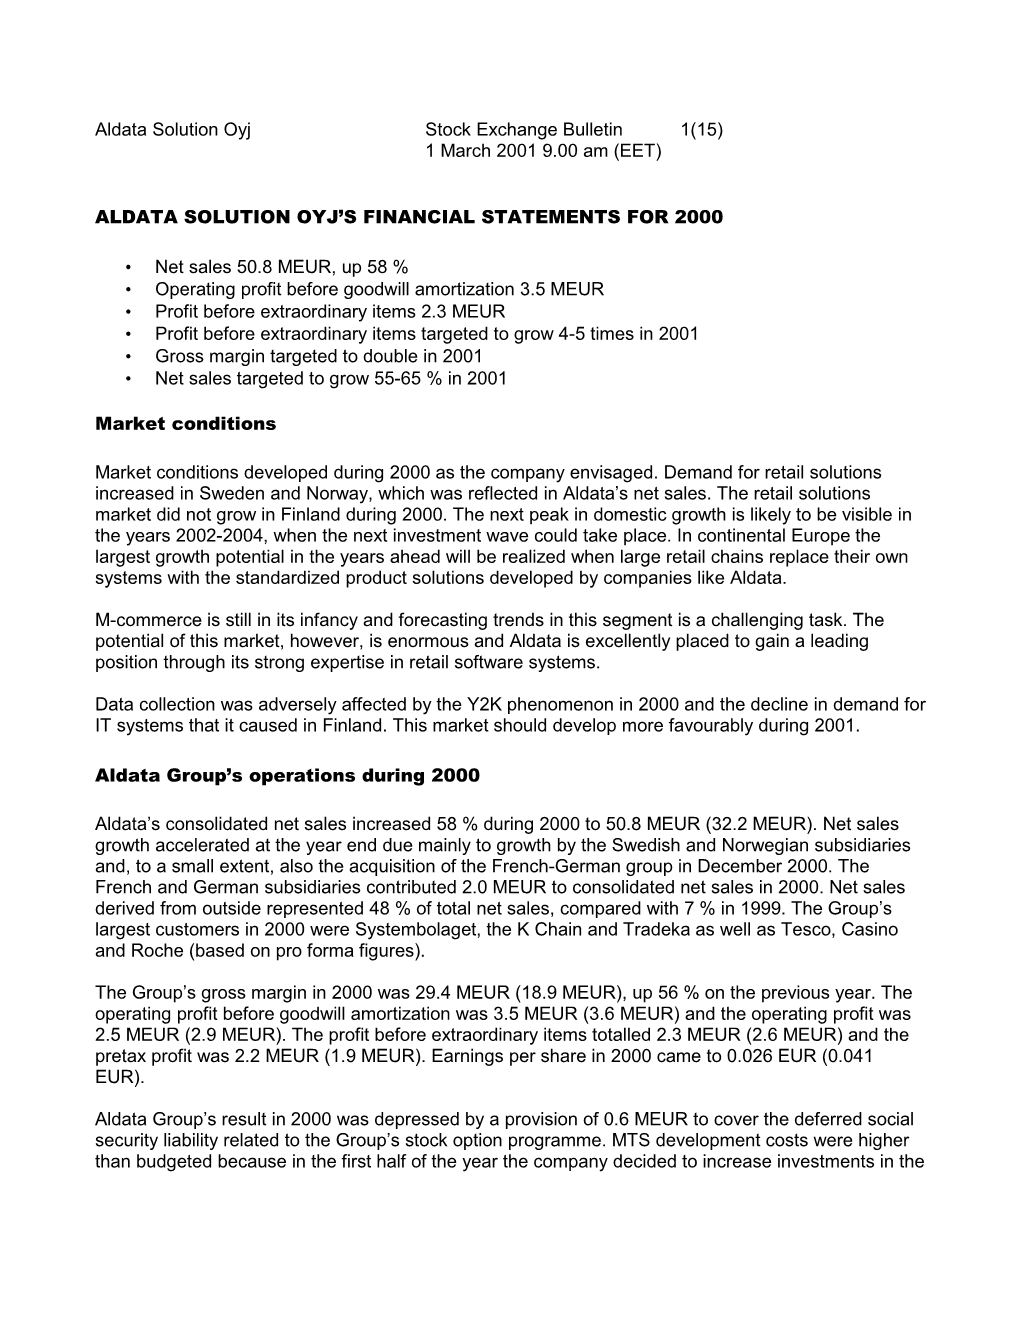 Aldata Solution Oyj Stock Exchange Bulletin 1(15) 1 March 2001 9.00 Am (EET)